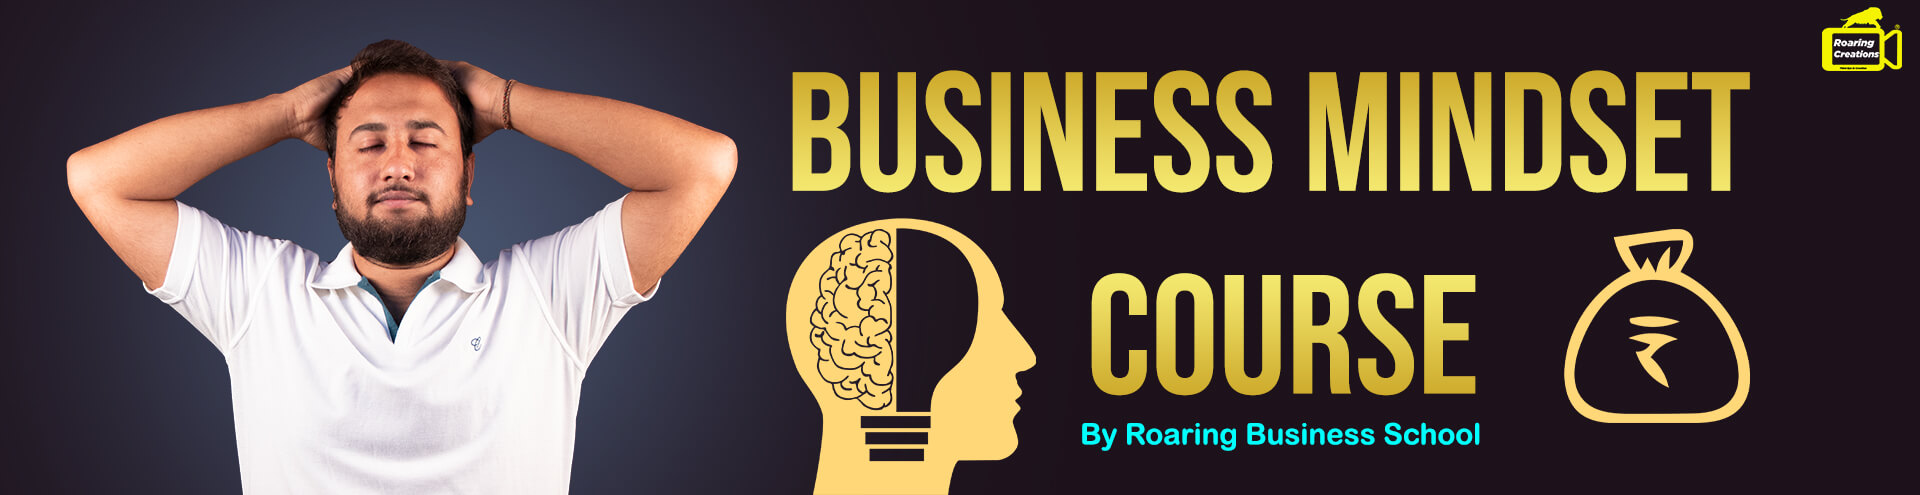 Business Mindset Course